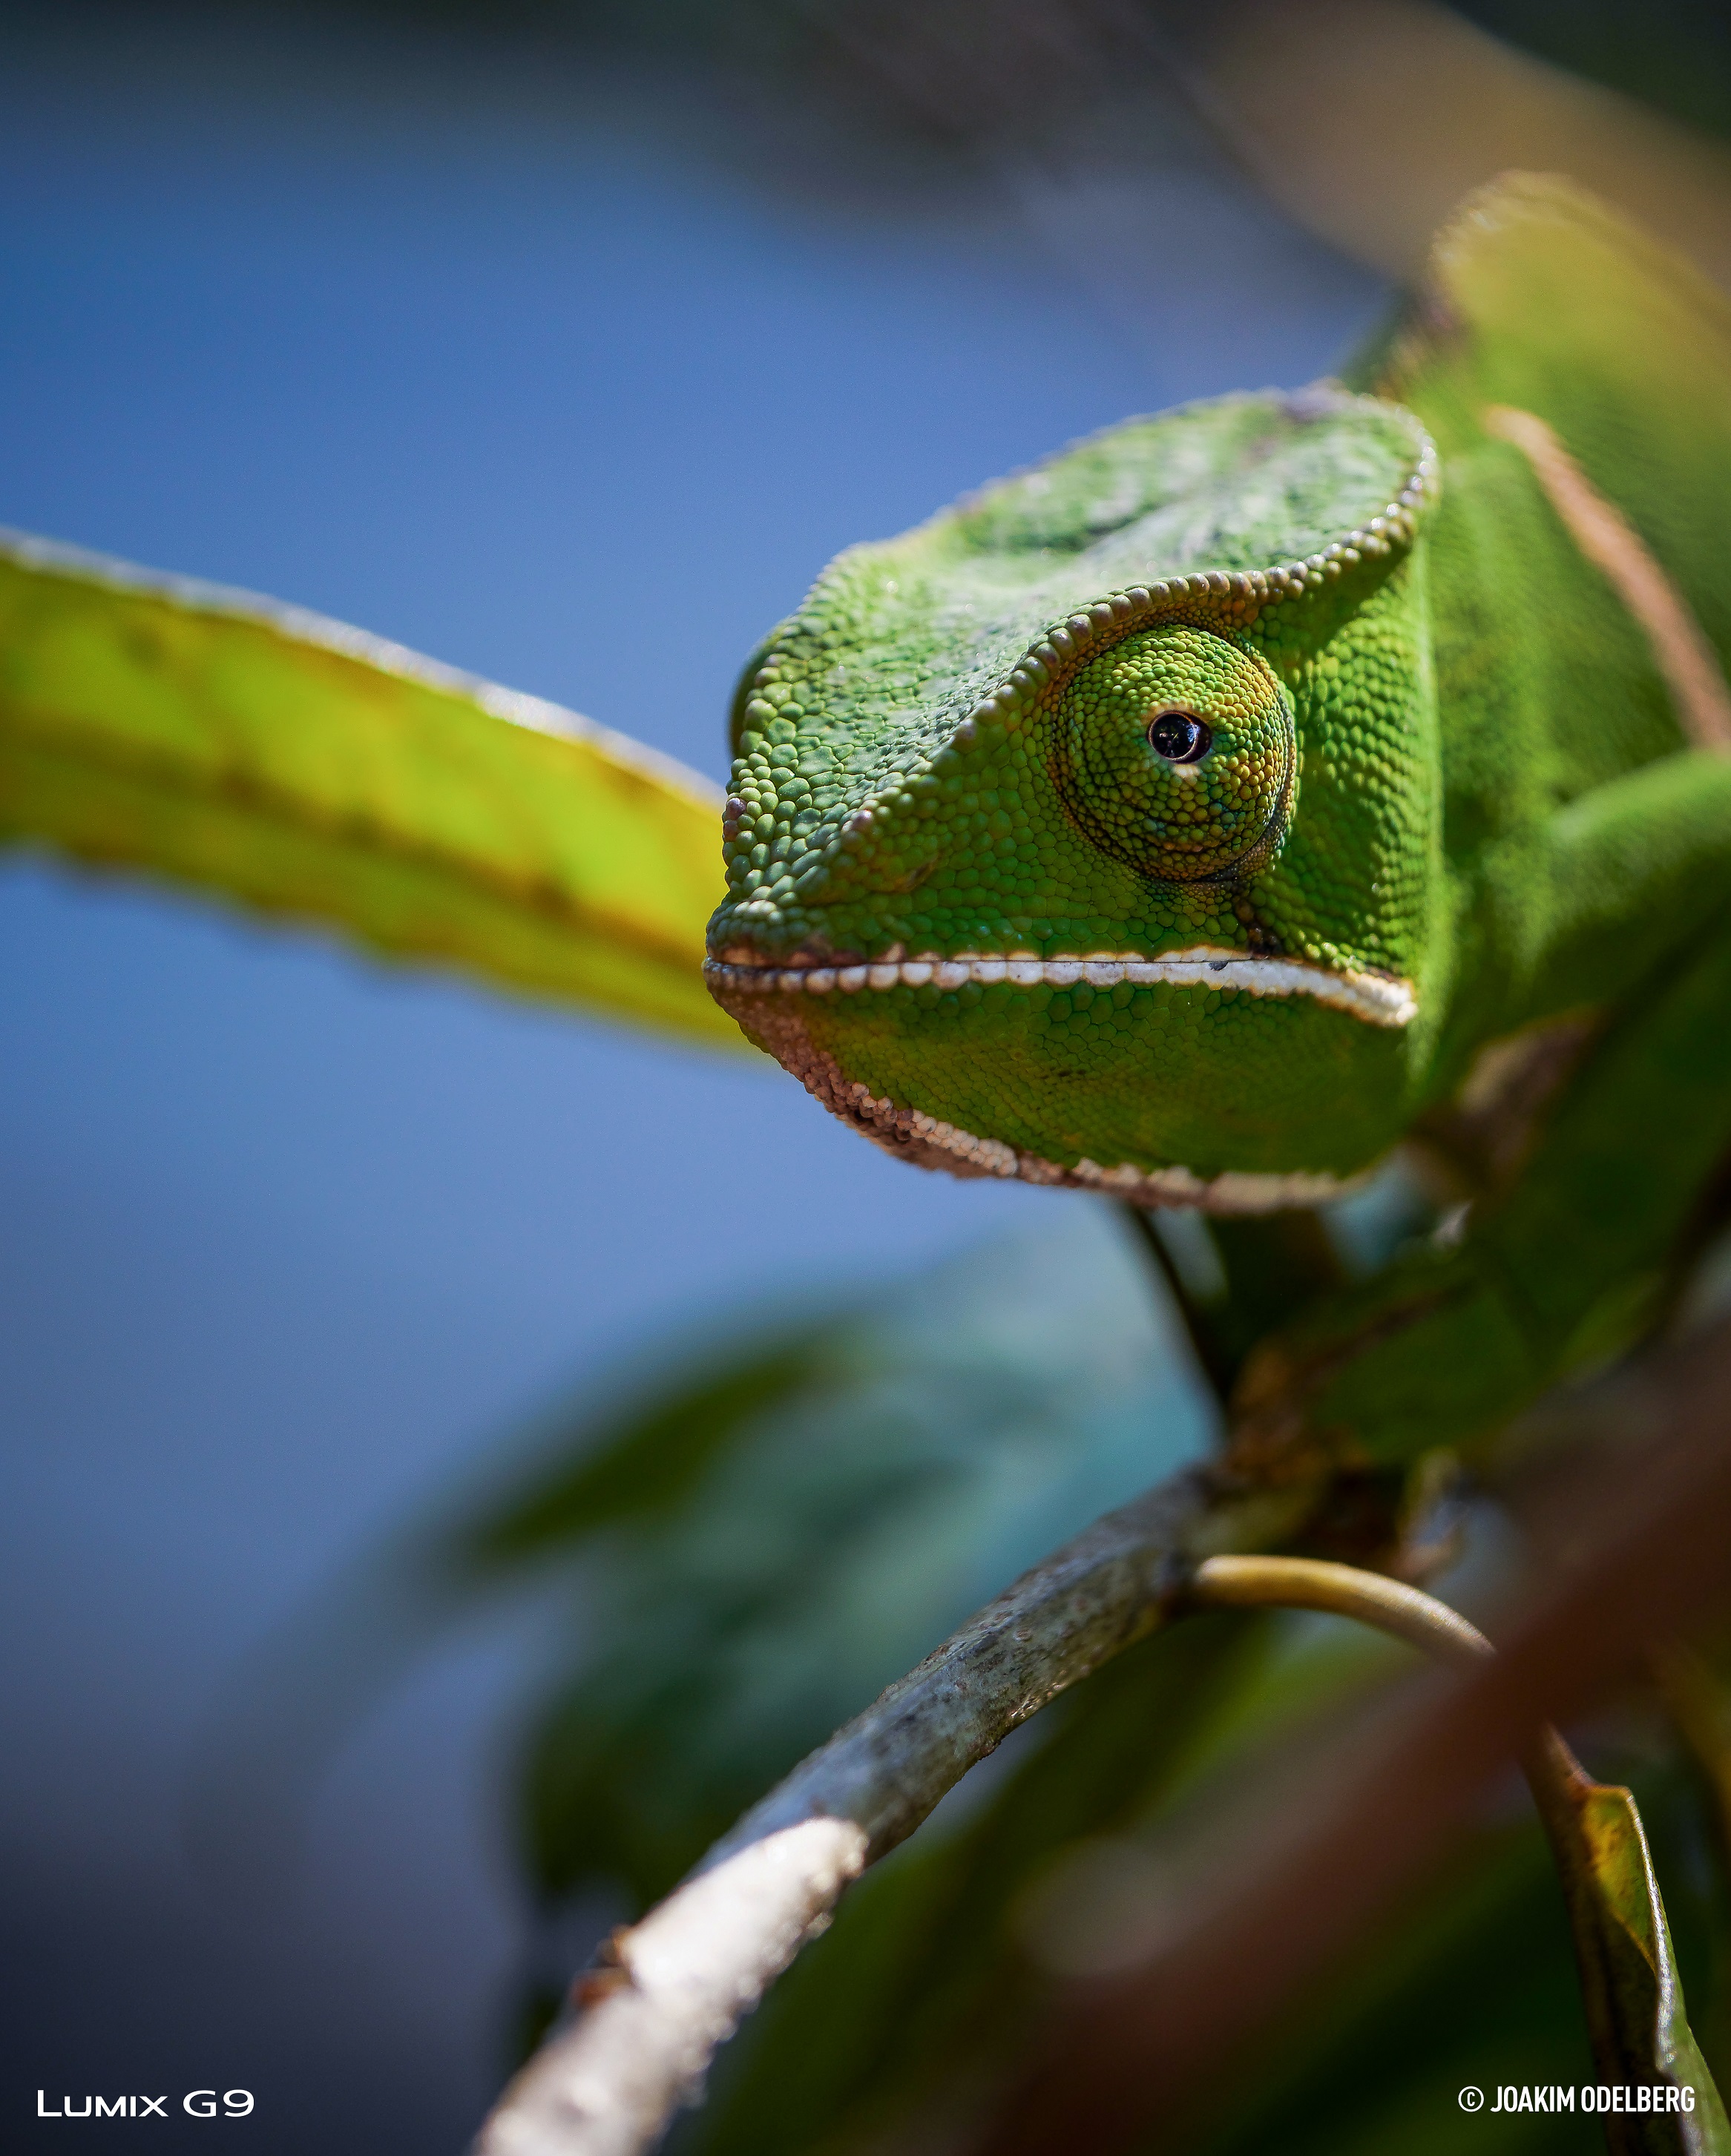 Two-banded chameleon (Furcifer balteastus) by Joakim Odelberg | The ...